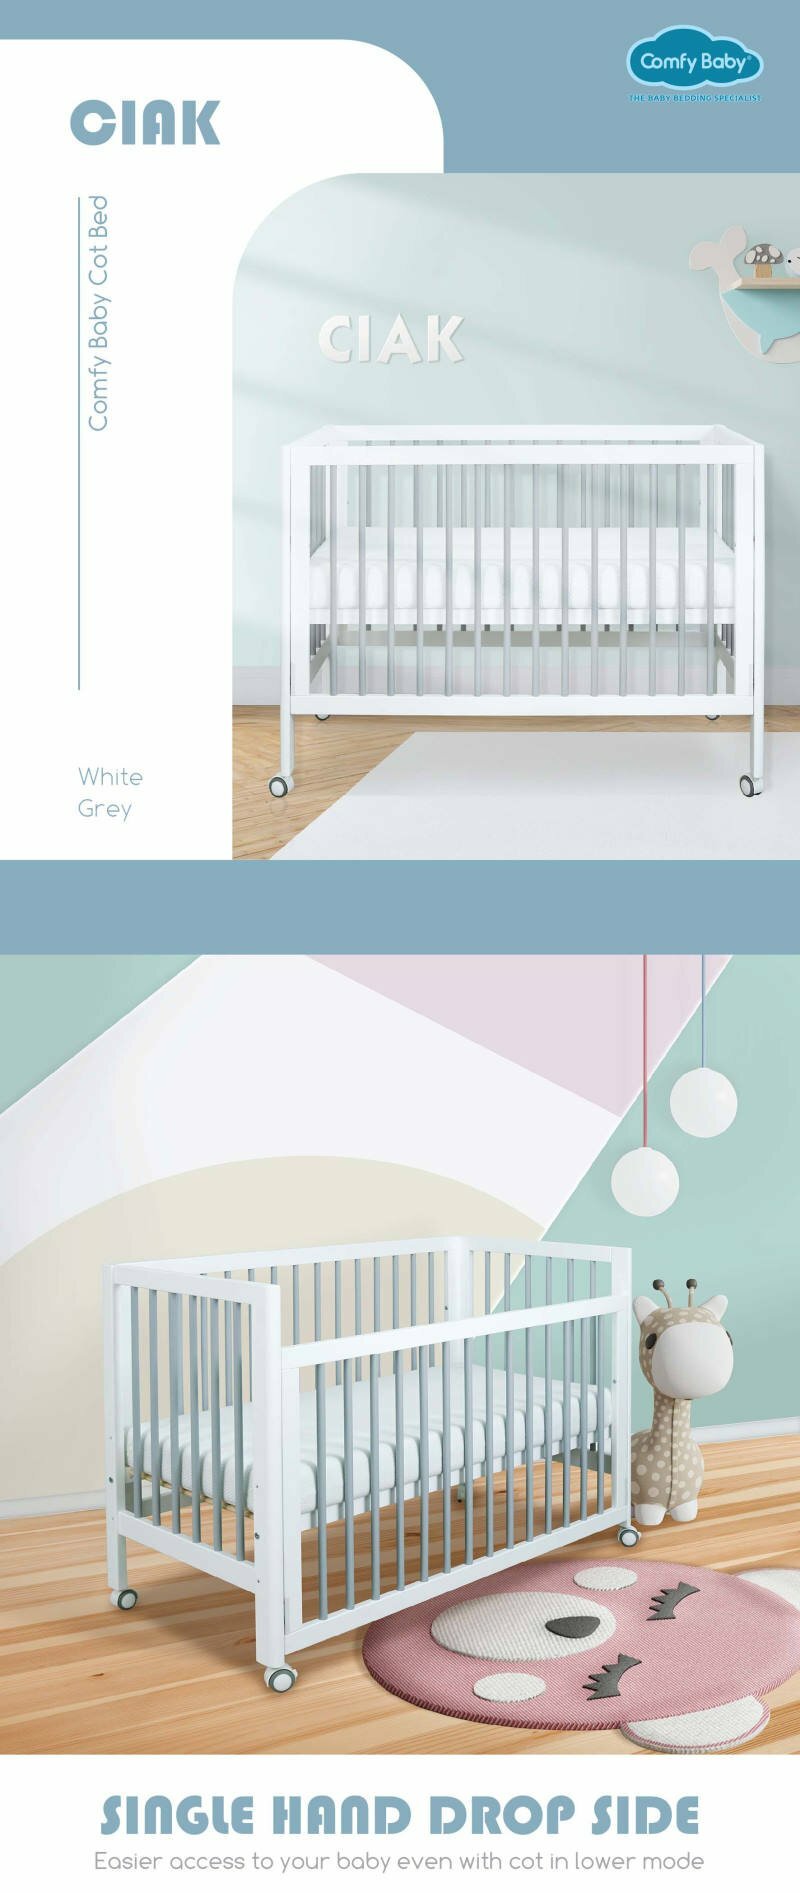 Comfy Baby Ciak Baby Cot Product Descriptions